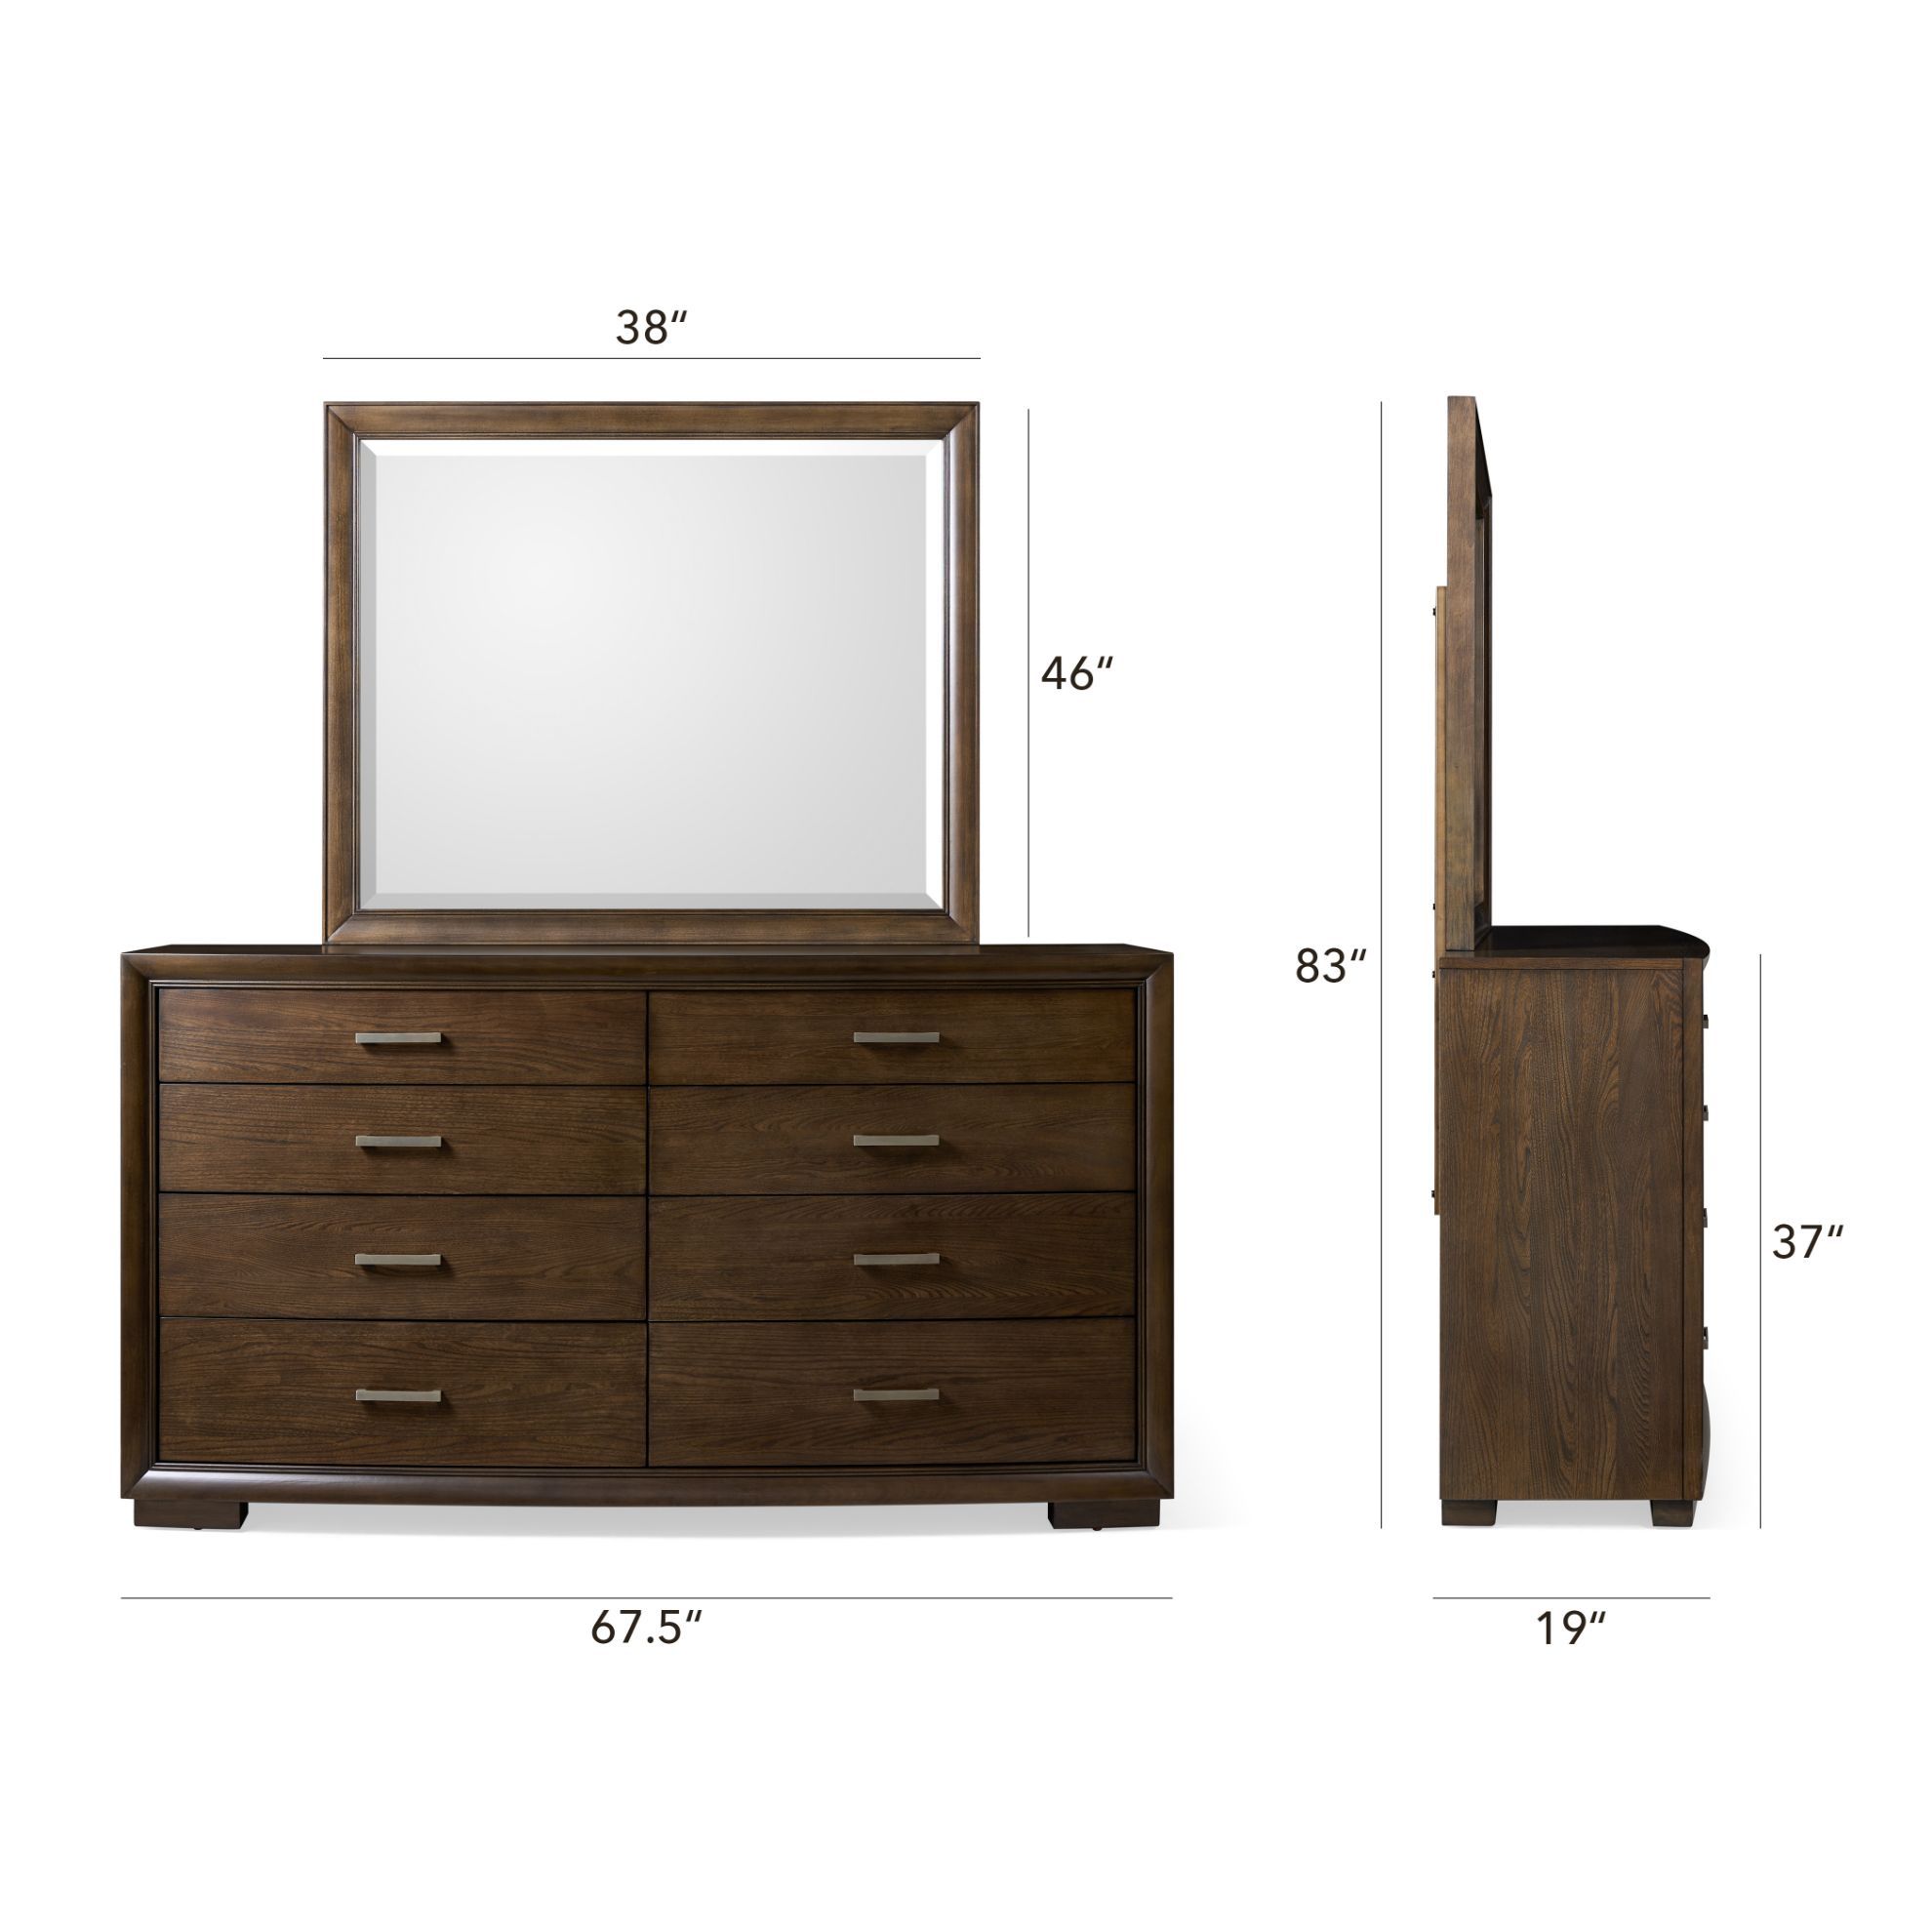 Picture of Monterey Dresser and Mirror Set